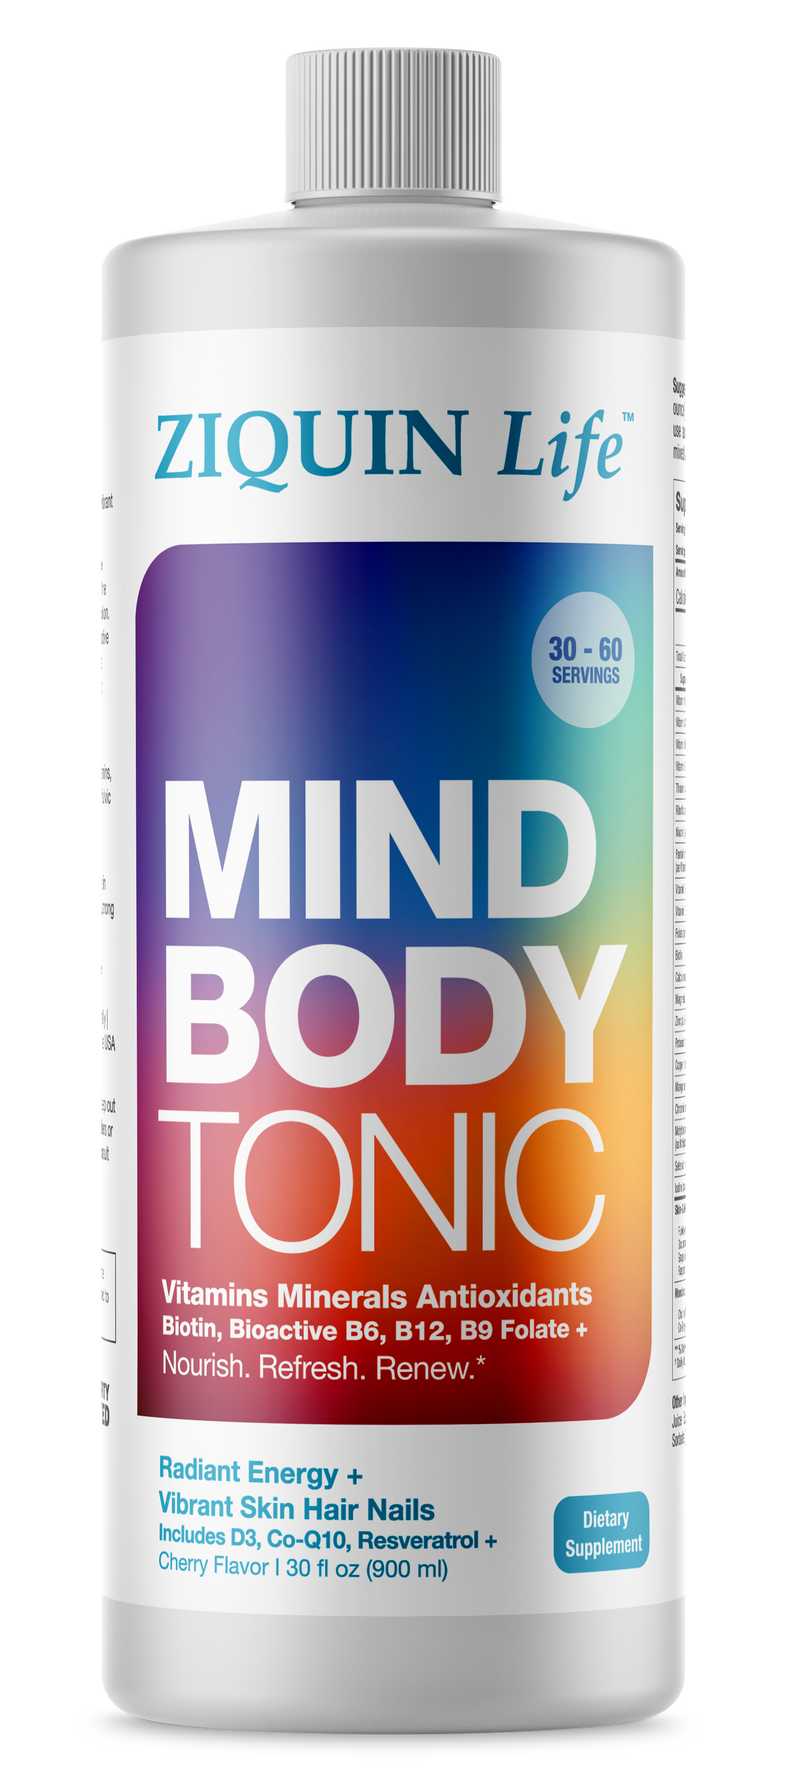 Buy Body tonic Body Tonic Everyday Use Daily Wear Bra, Casual